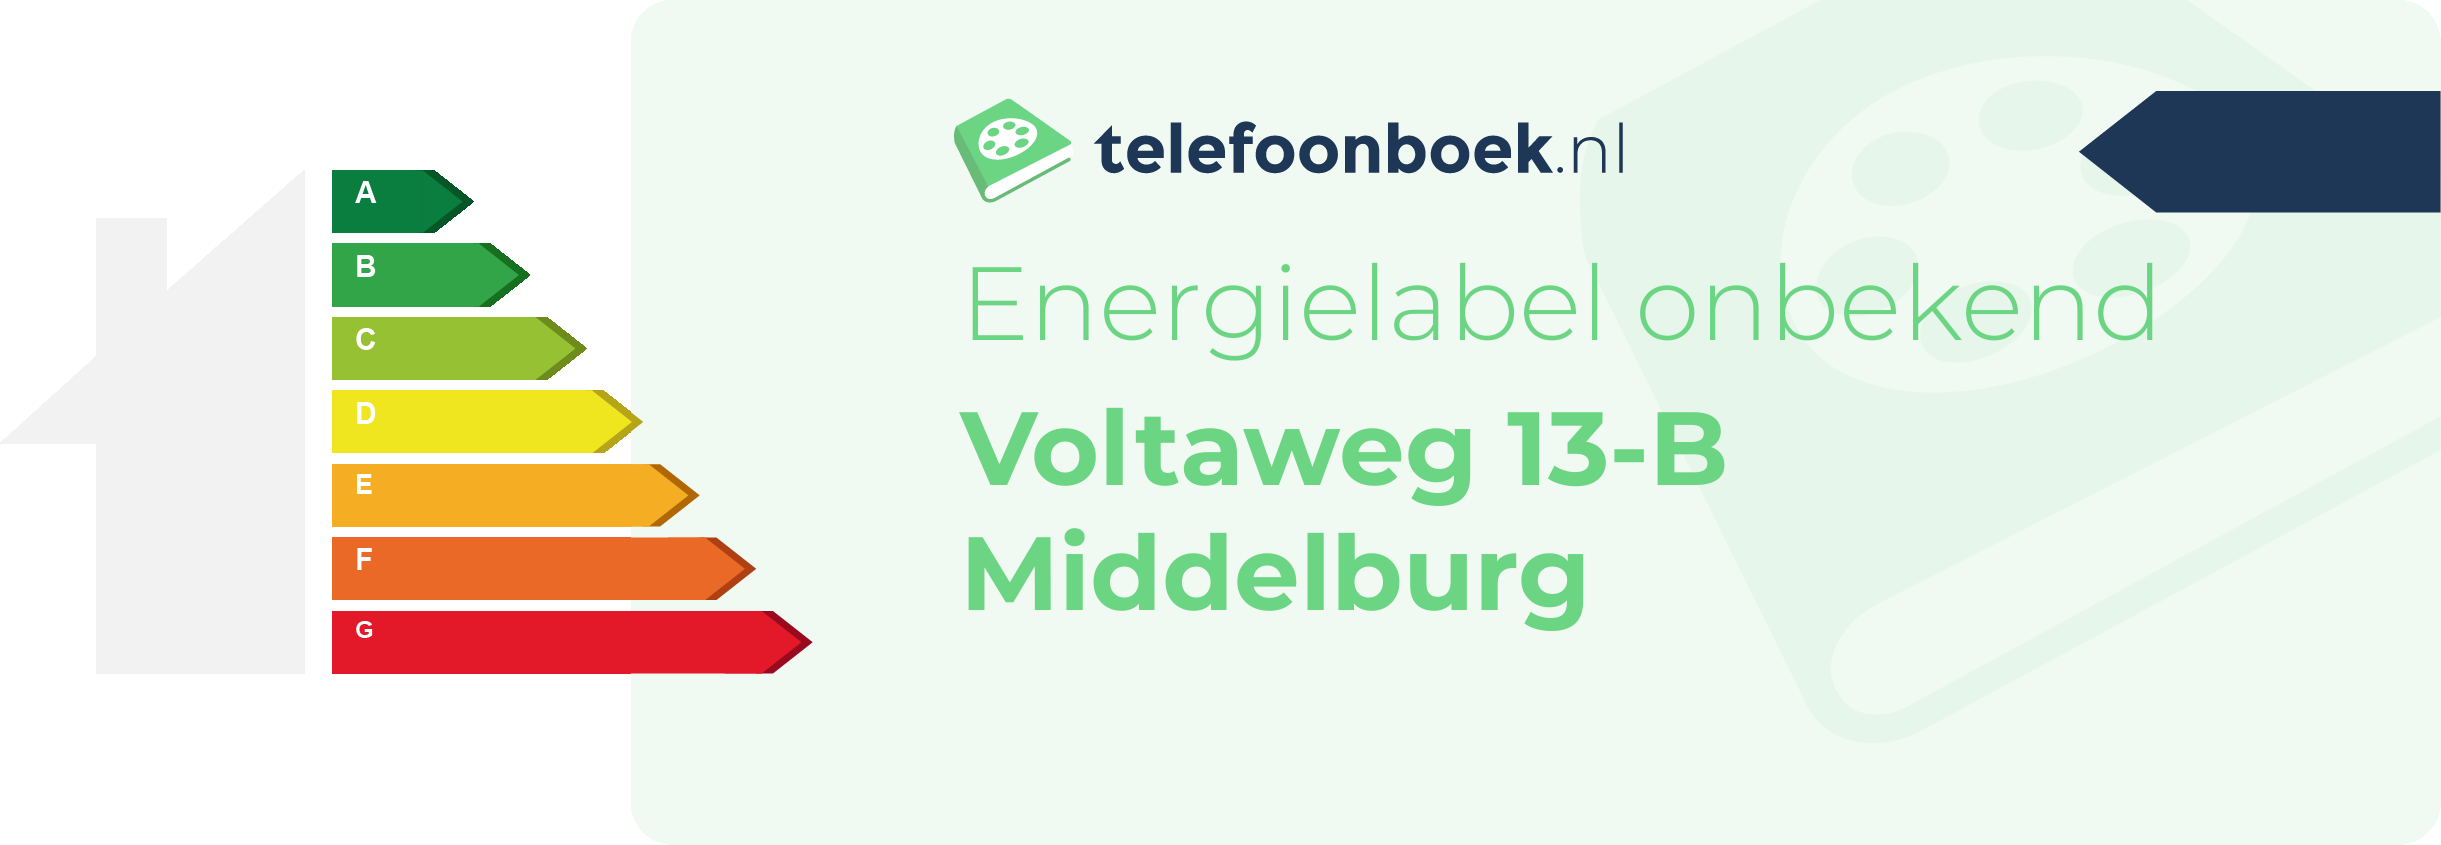 Energielabel Voltaweg 13-B Middelburg